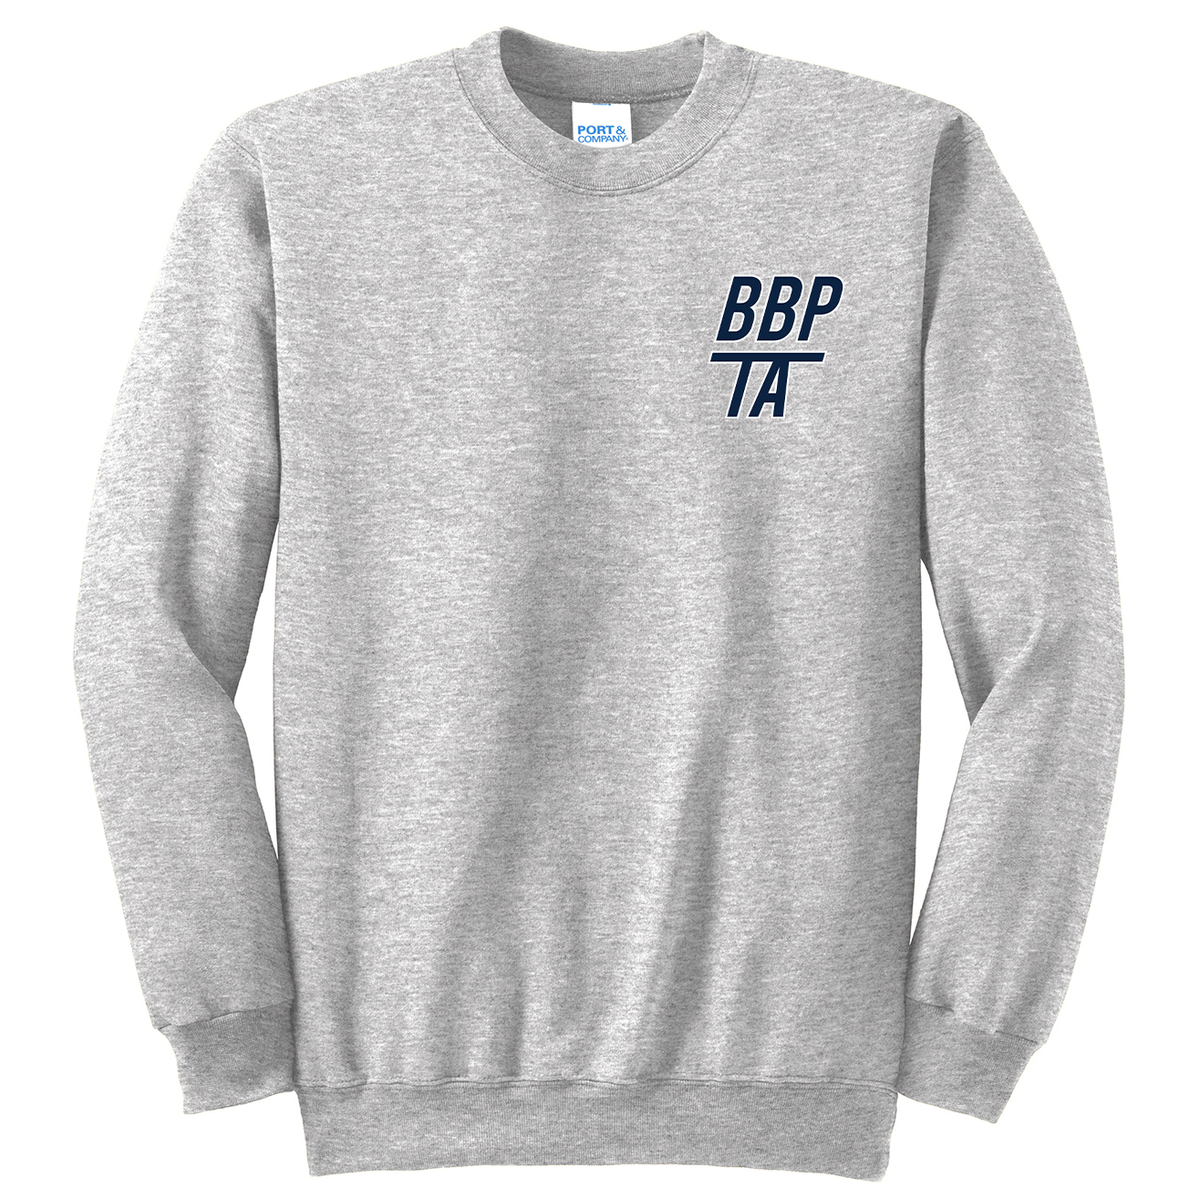 BBP TA Crew Neck Sweater